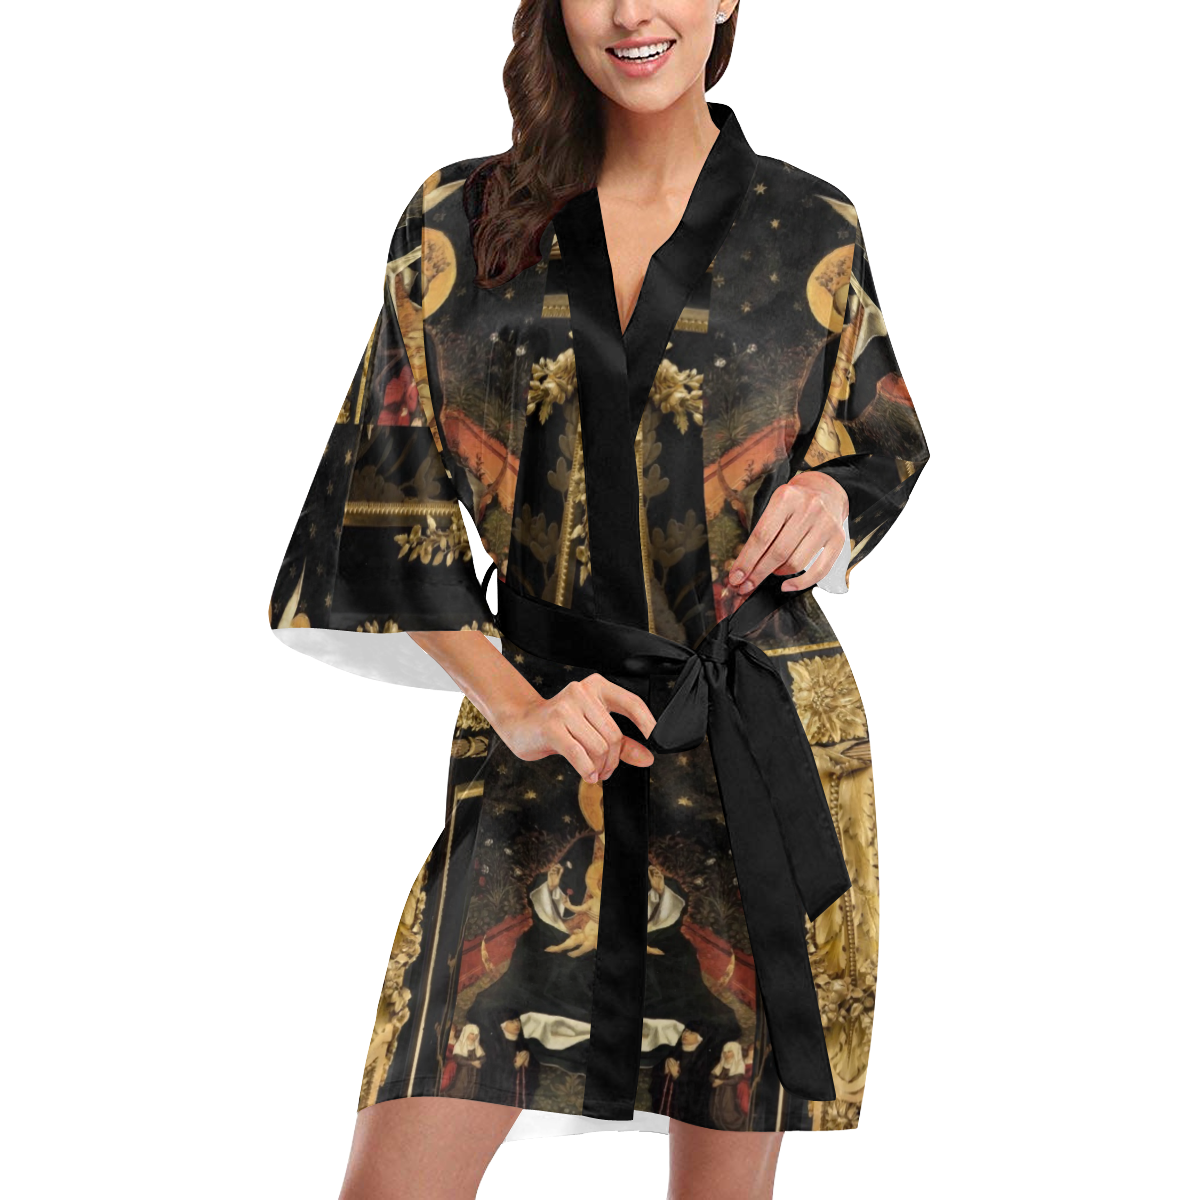 Robe | target bathrobe ugg robe women ll bean robe natori robe